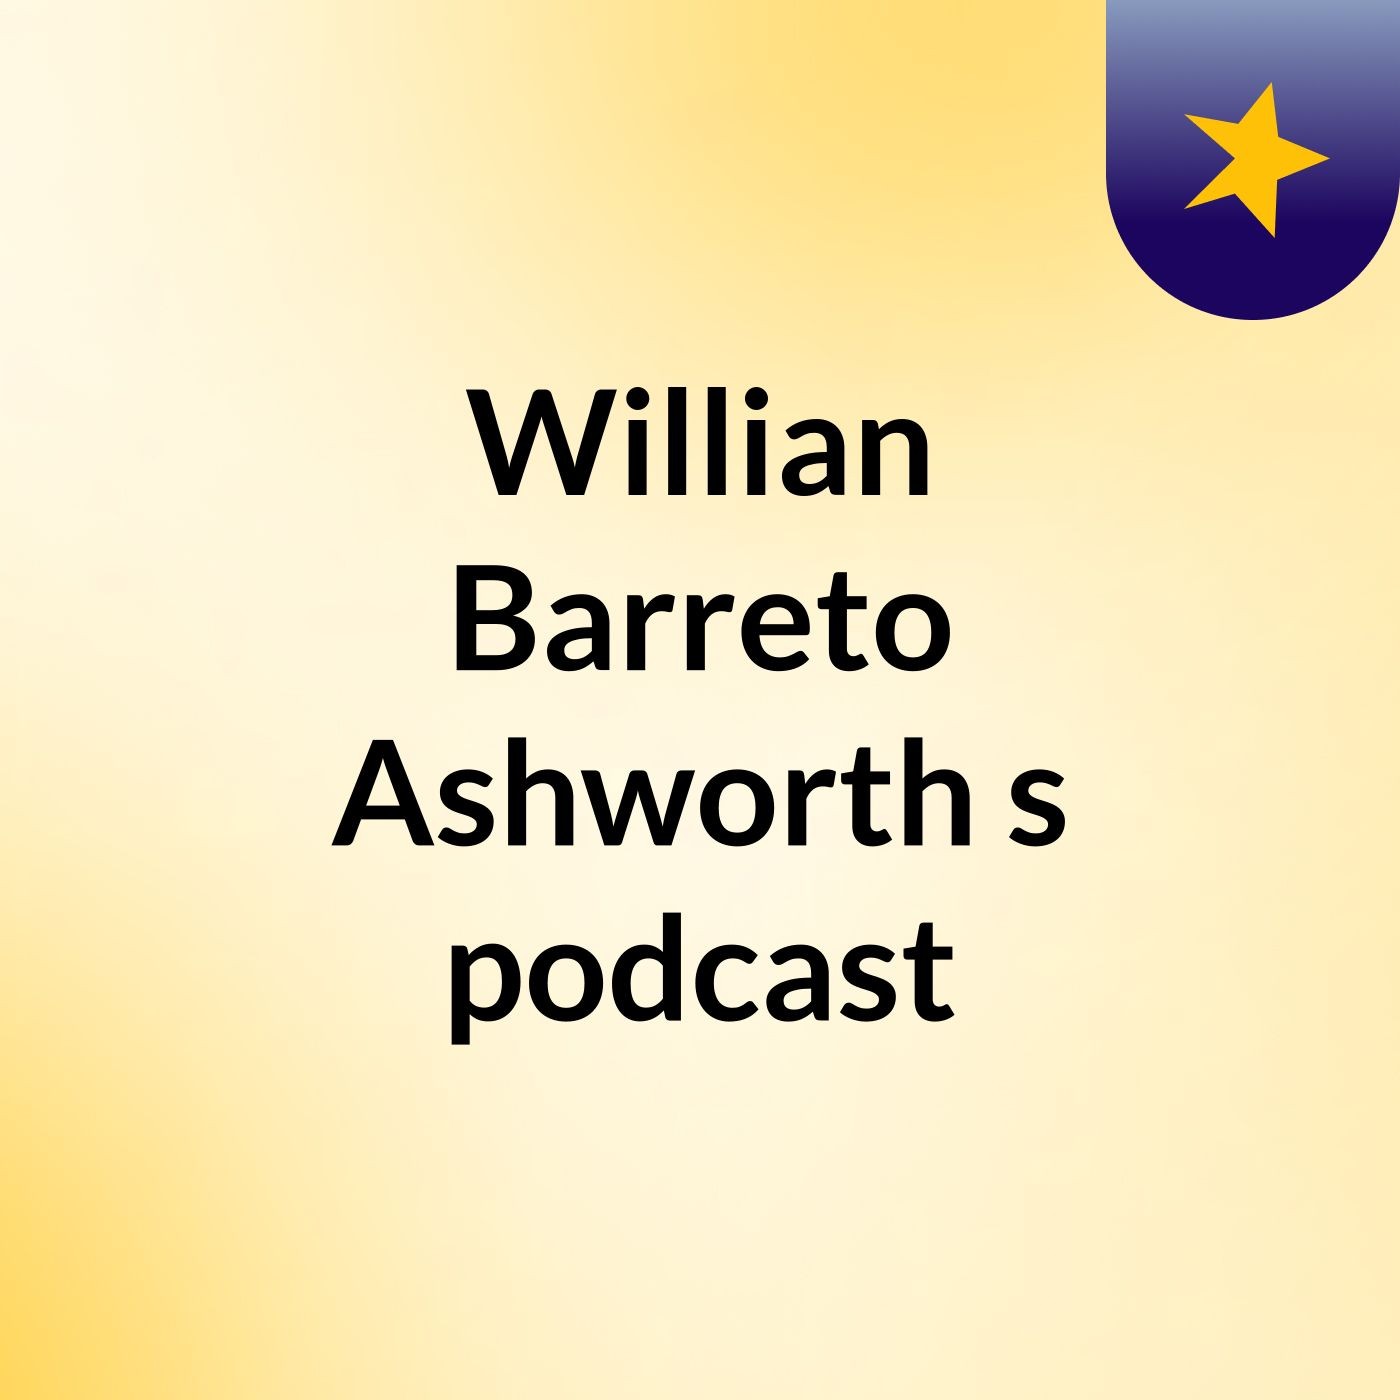 Willian Barreto Ashworth's podcast